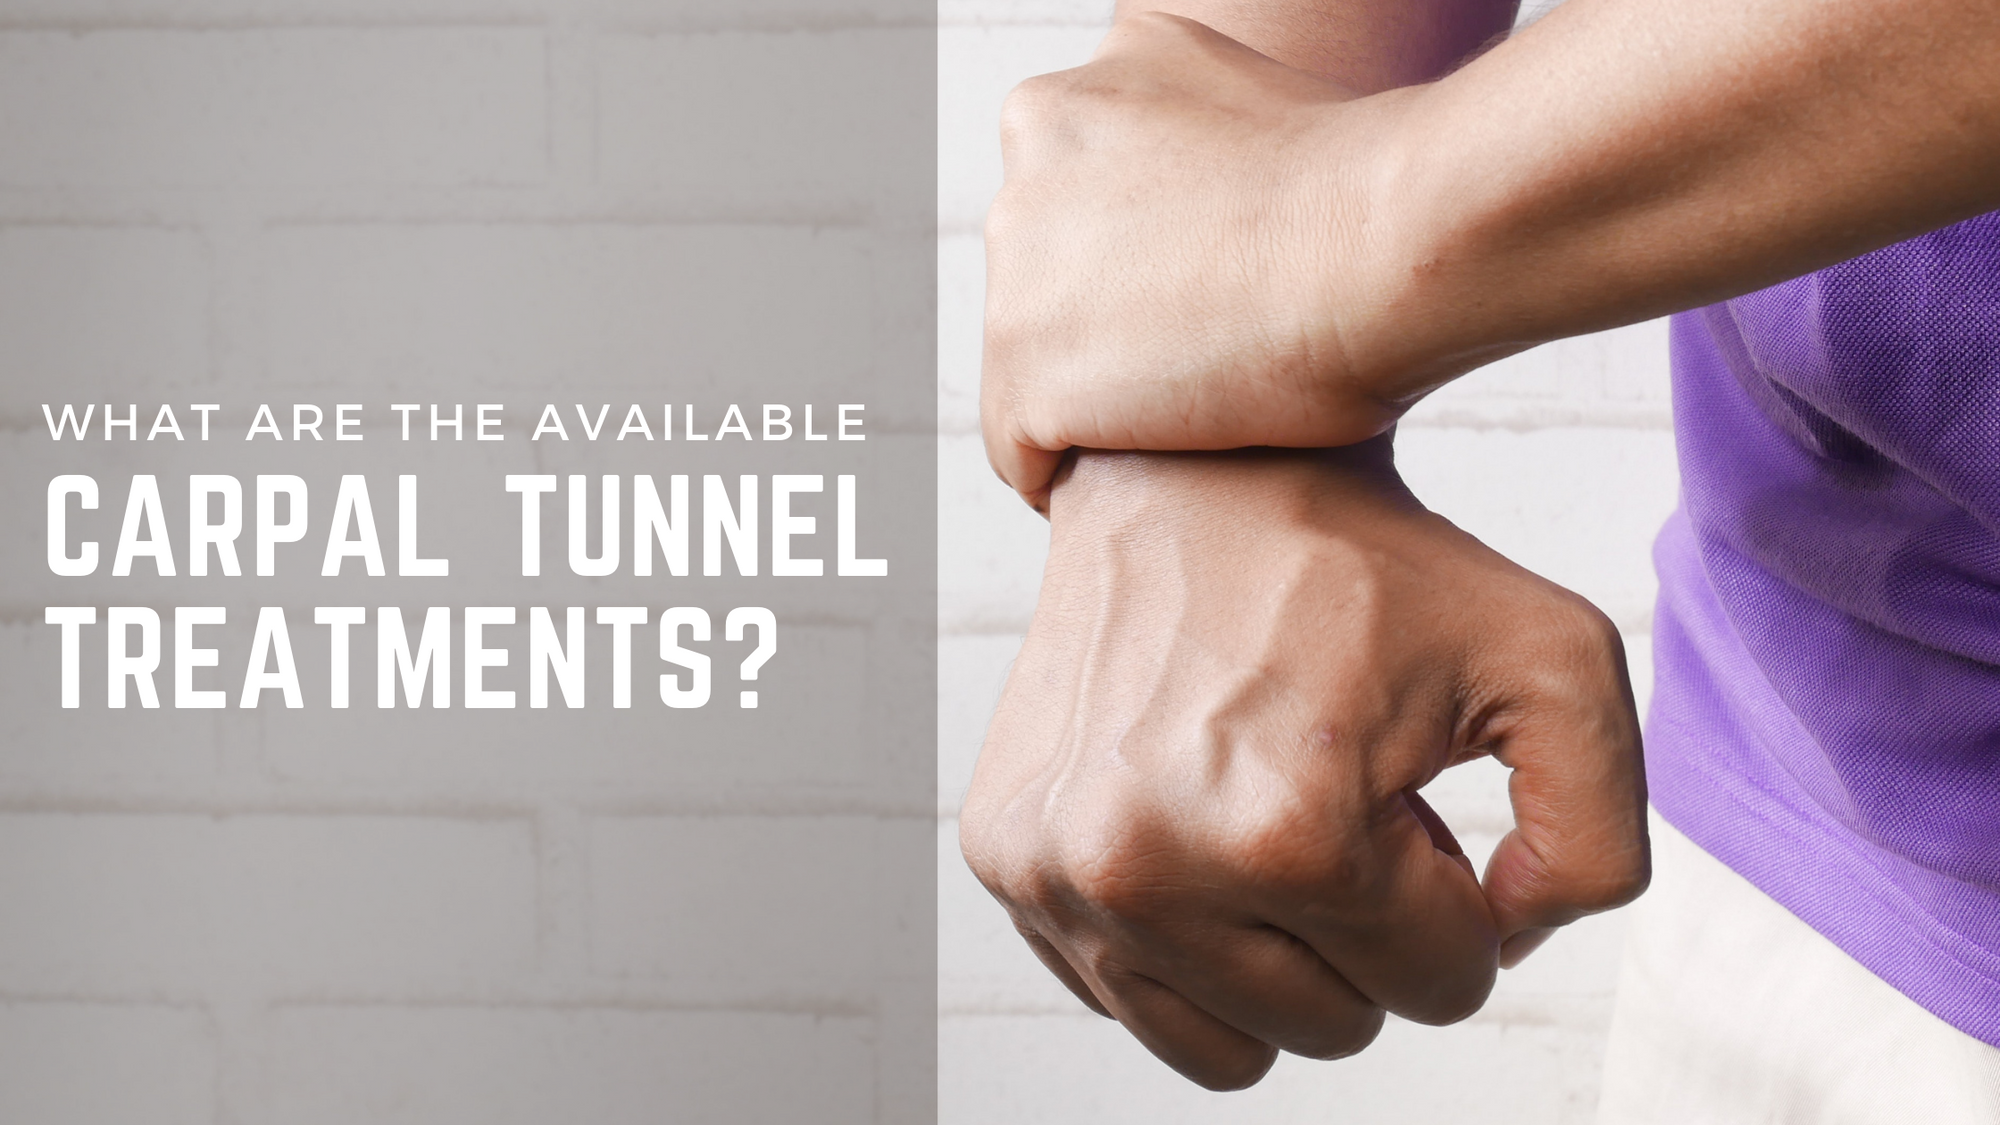 Carpal tunnel treatments